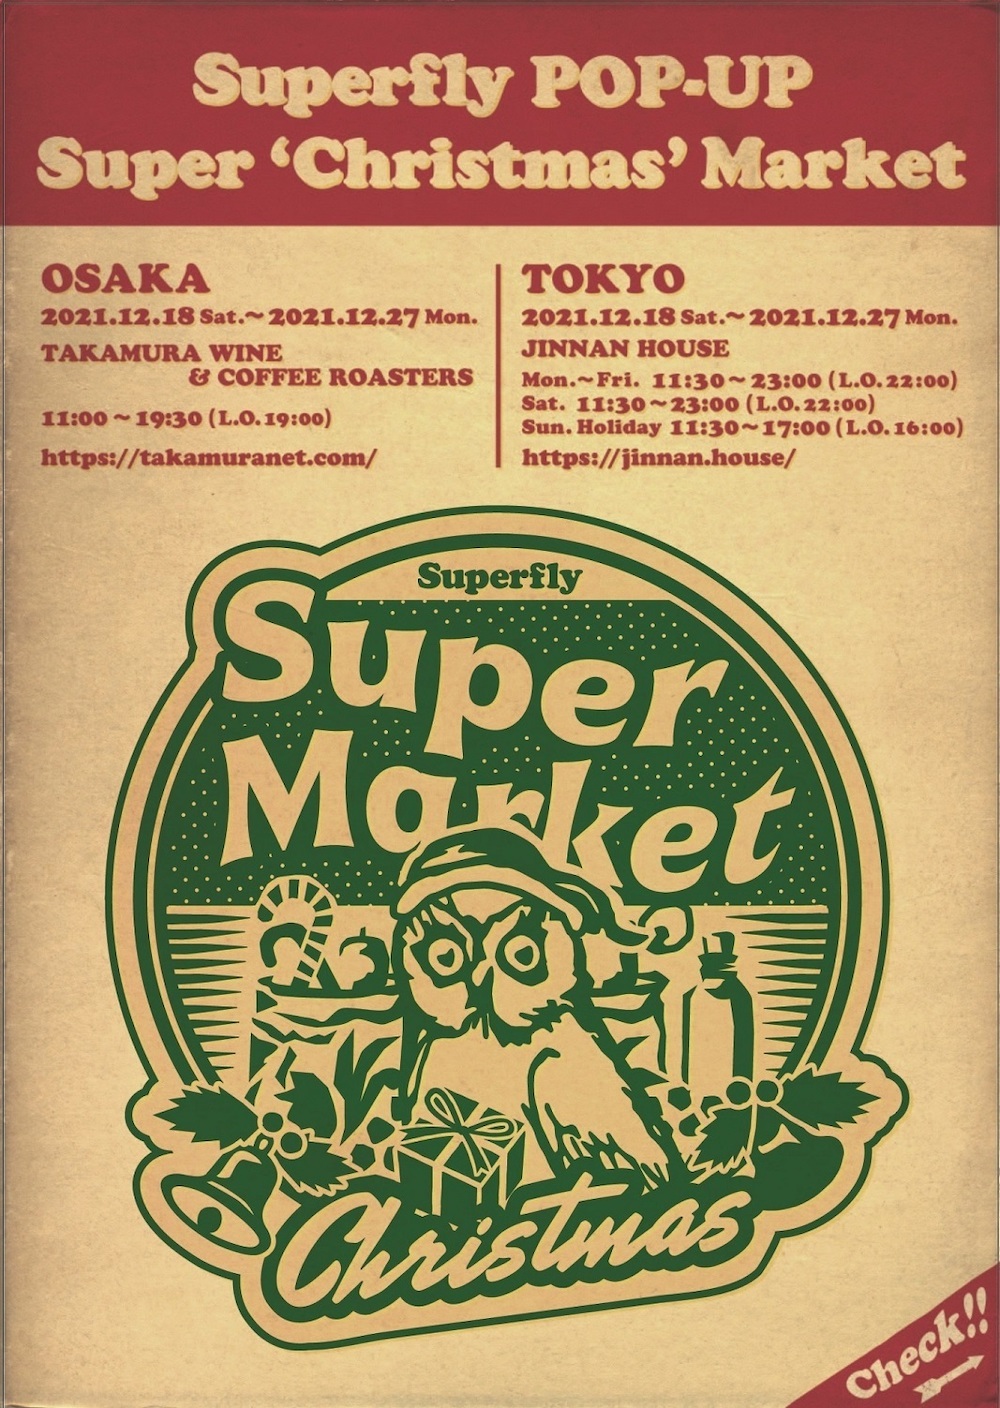 Super ‘Christmas’ Market